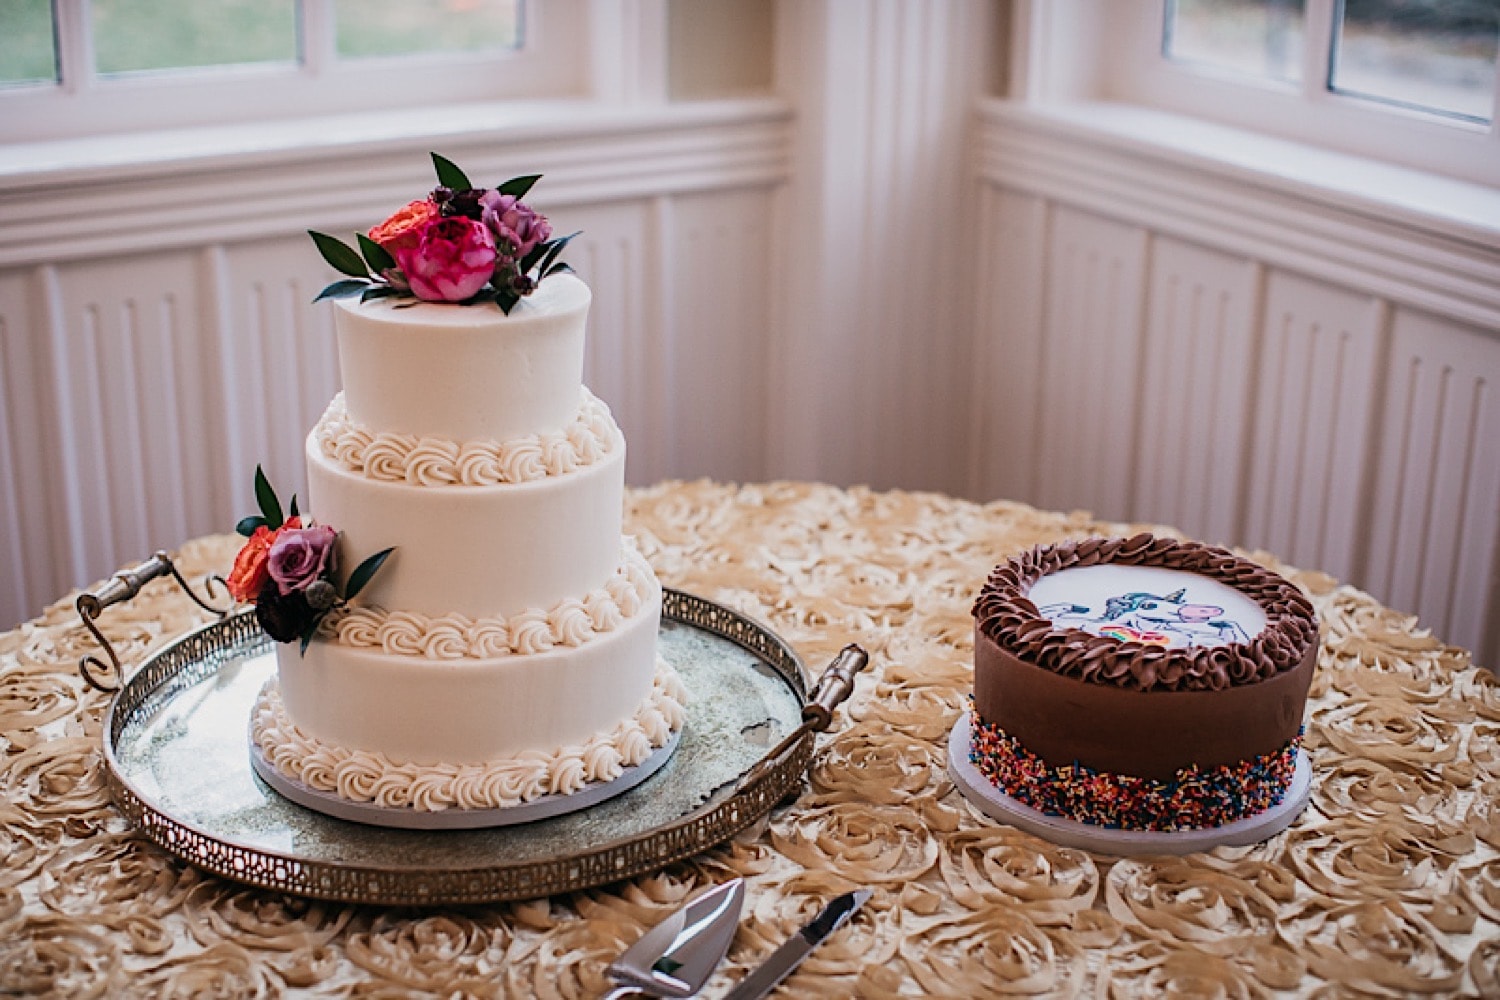 3 tier cake with flowers by Jordan Grisham